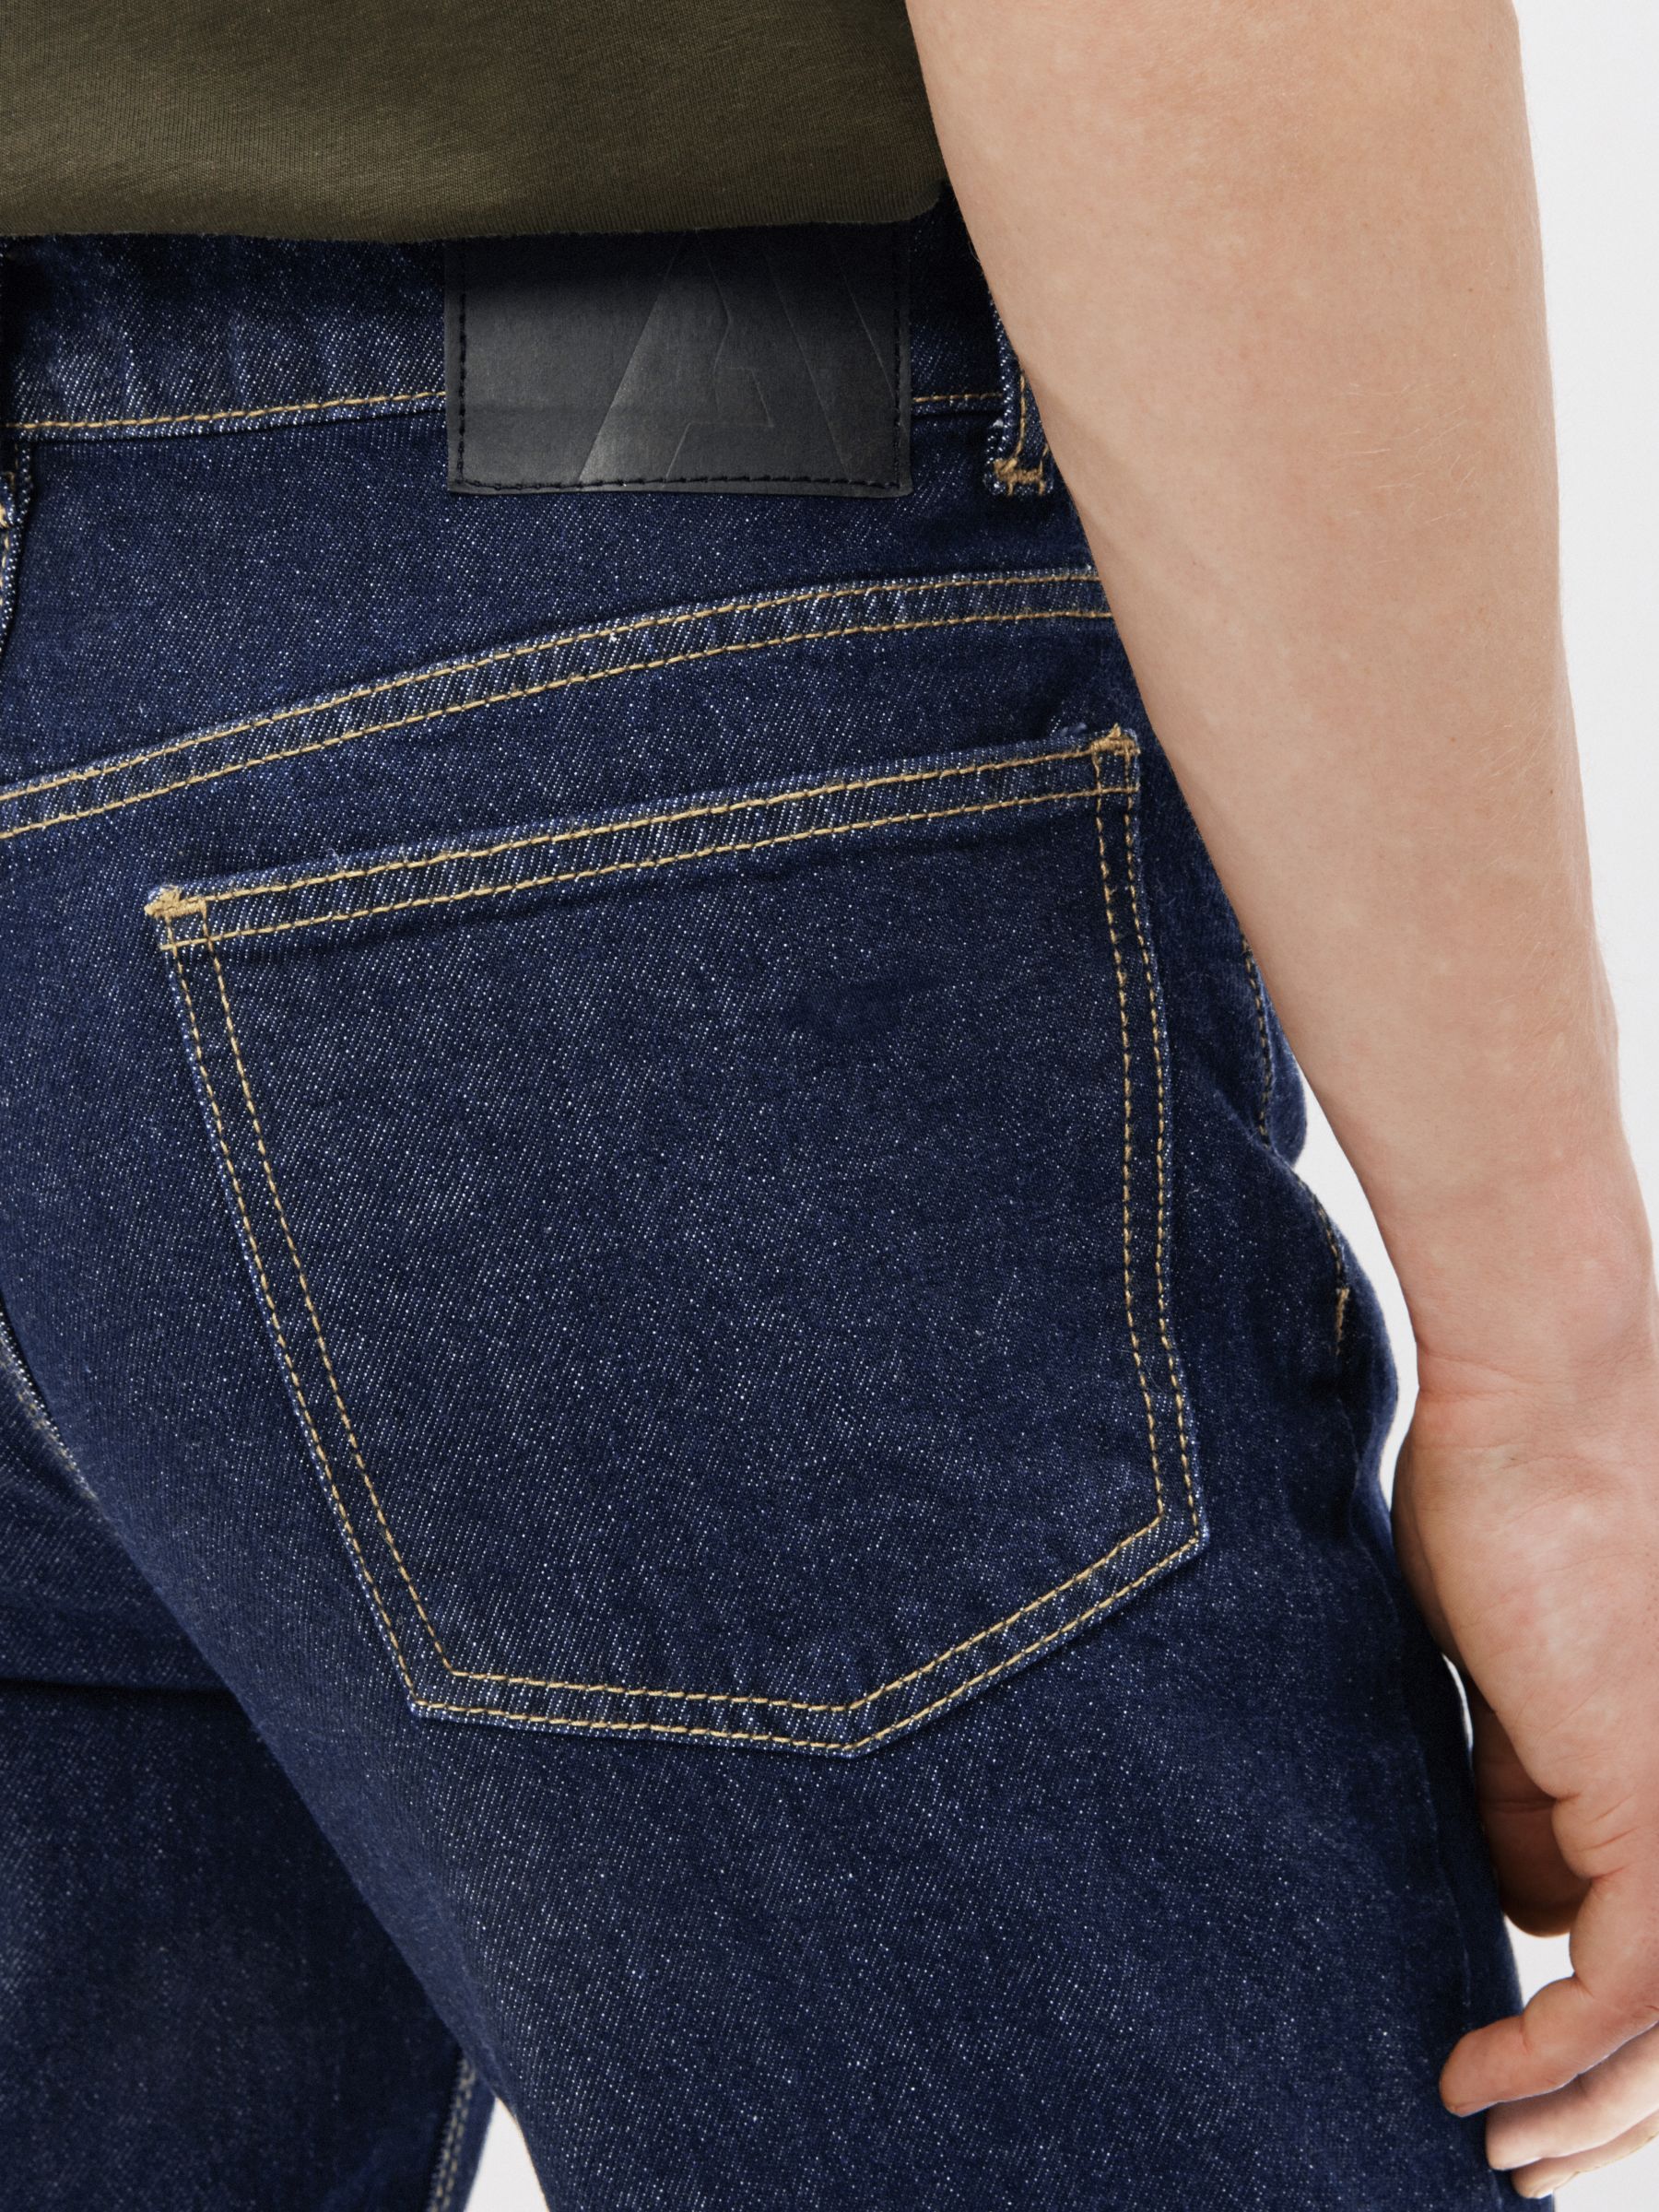 John Lewis ANYDAY Slim Fit Denim Jeans, Dark Wash at John Lewis & Partners